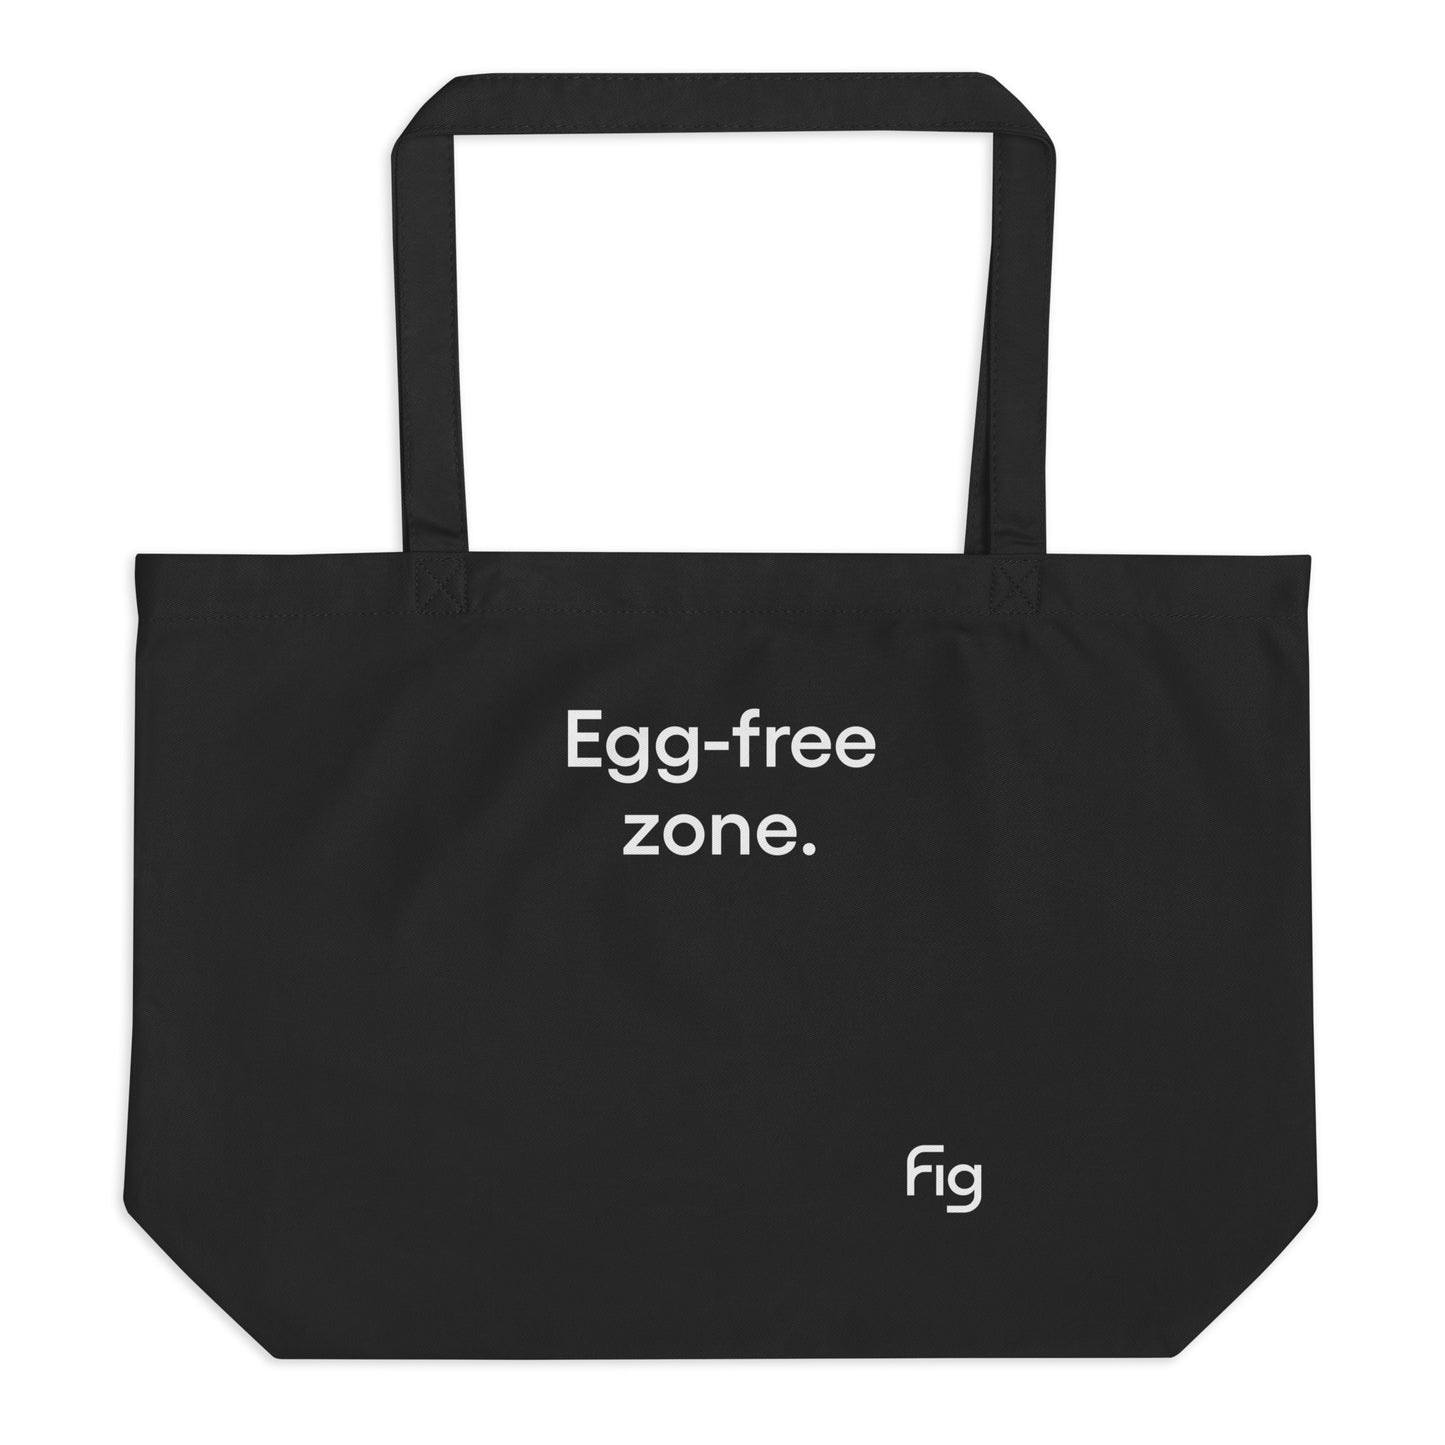 Egg-free zone | Large organic tote bag